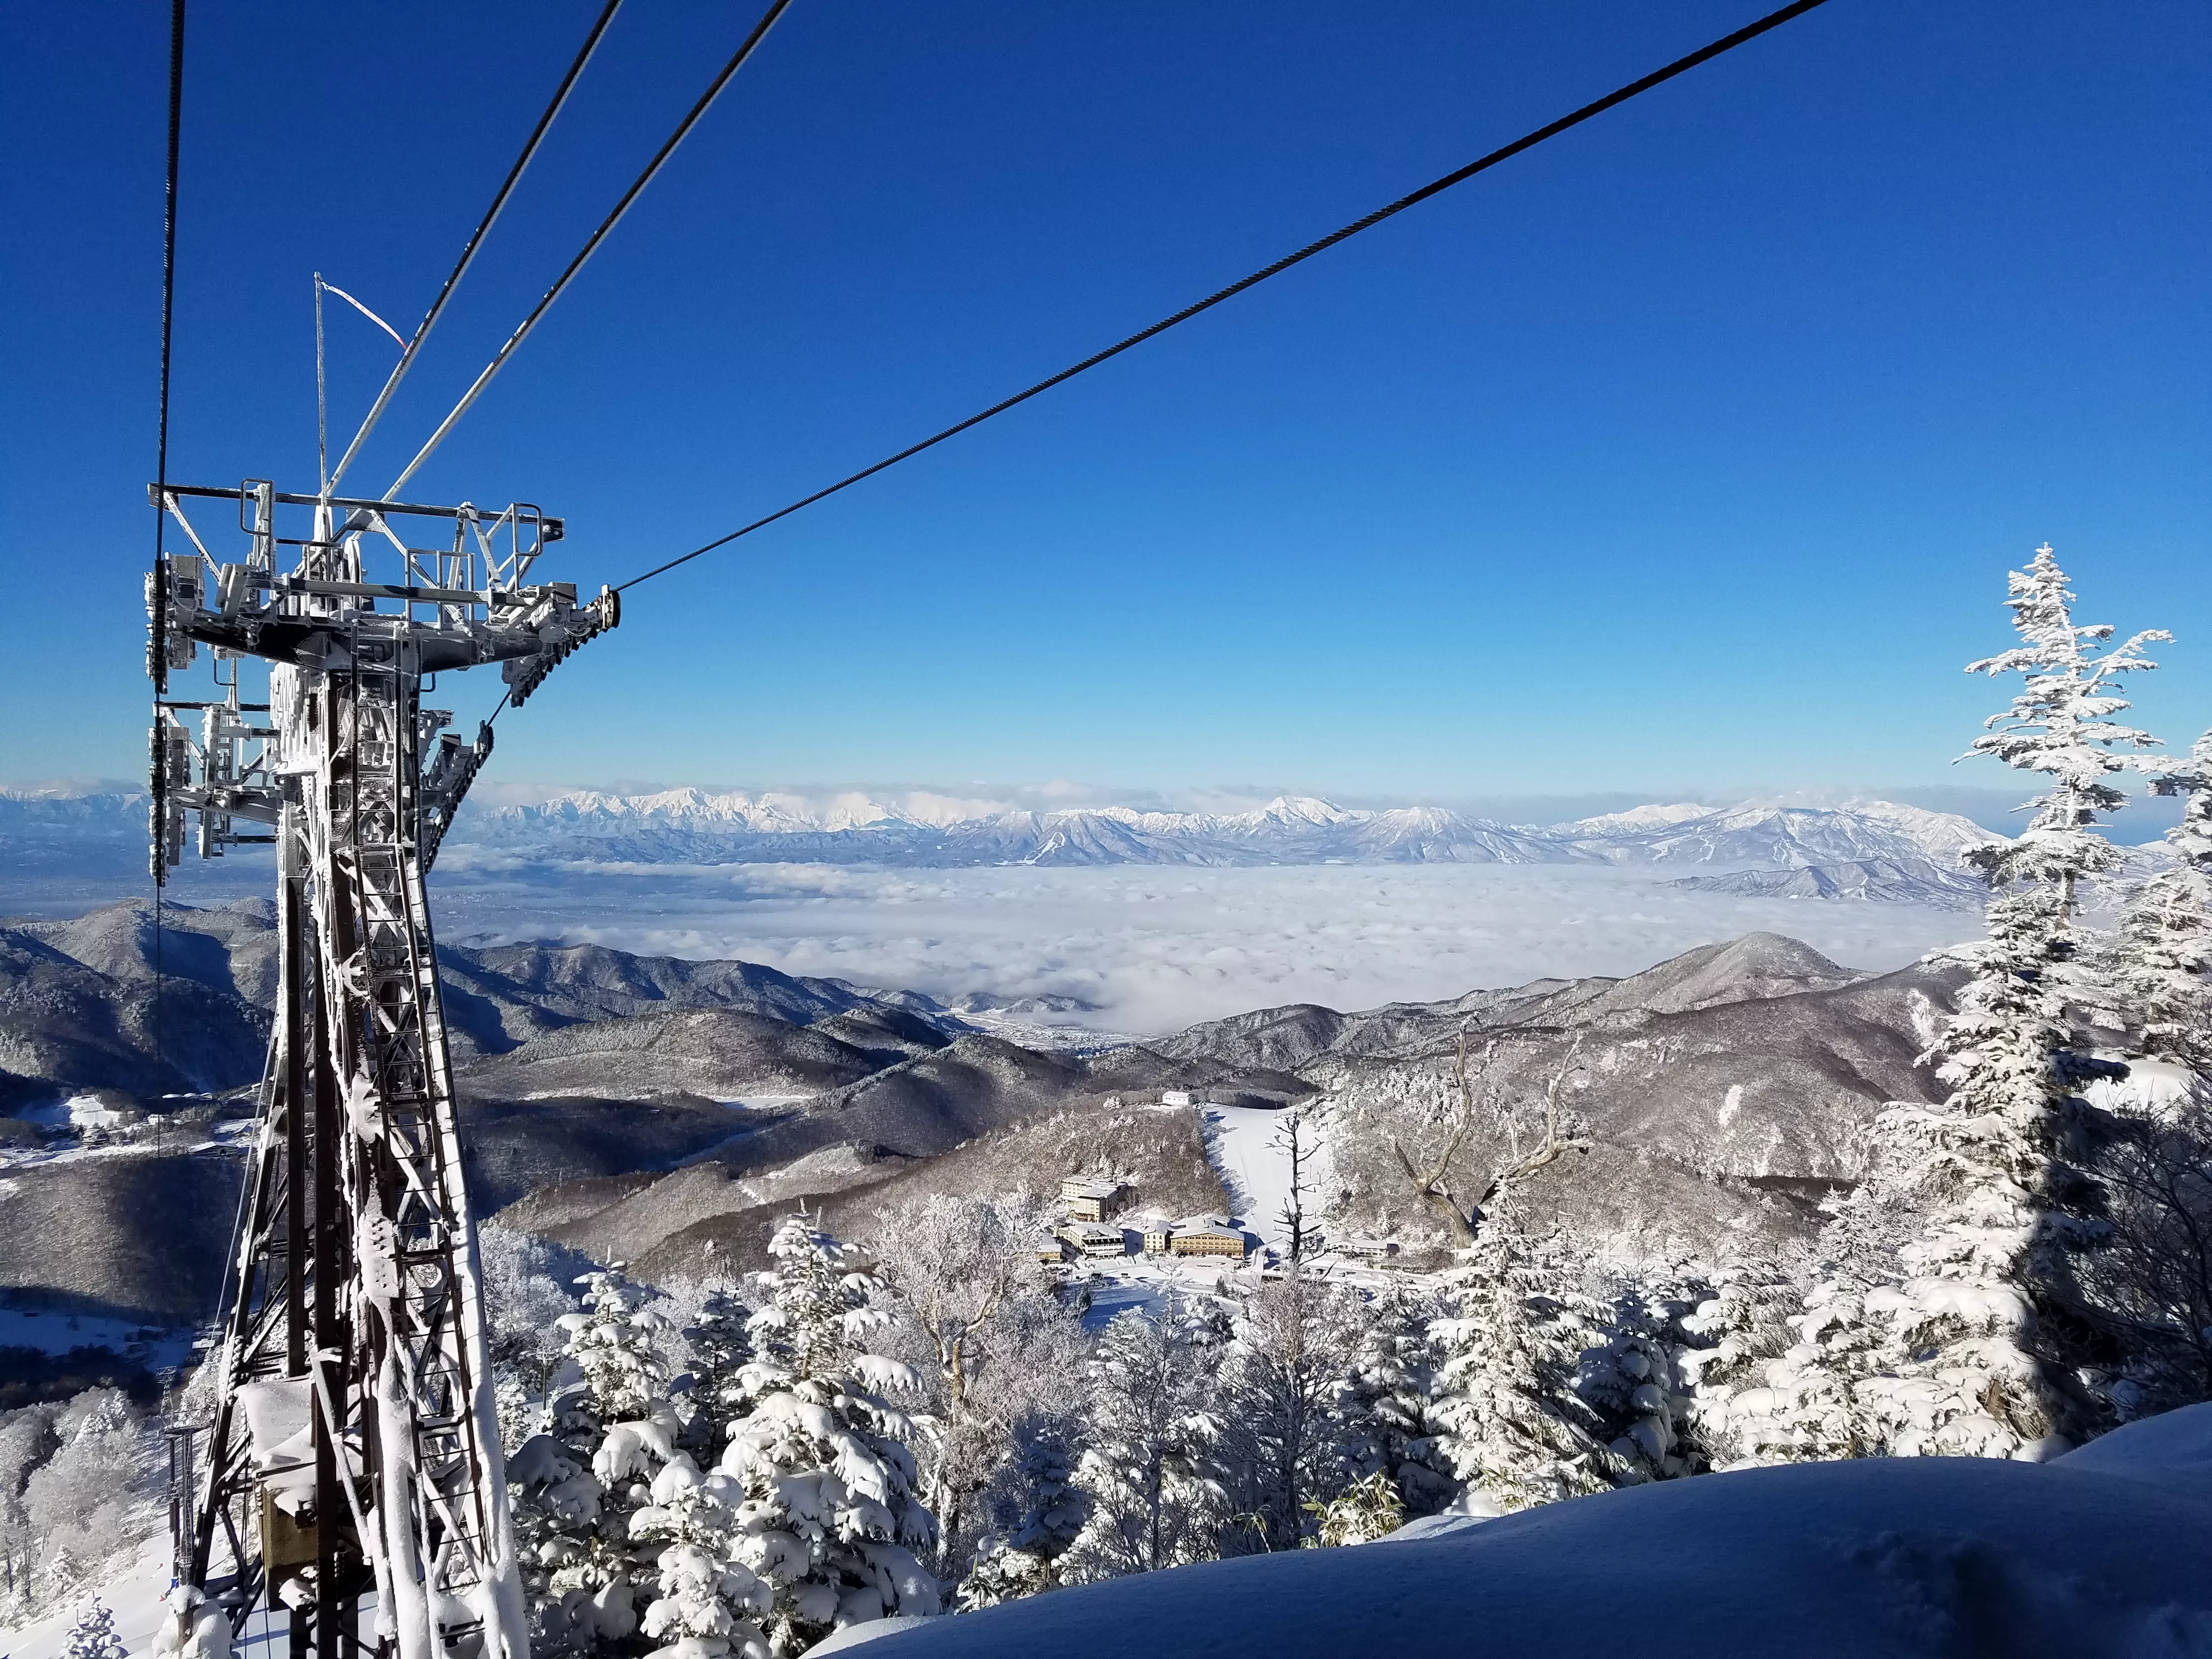 Shiga Kogen in Japan, East Asia | Snowboarding,Skiing - Rated 3.2